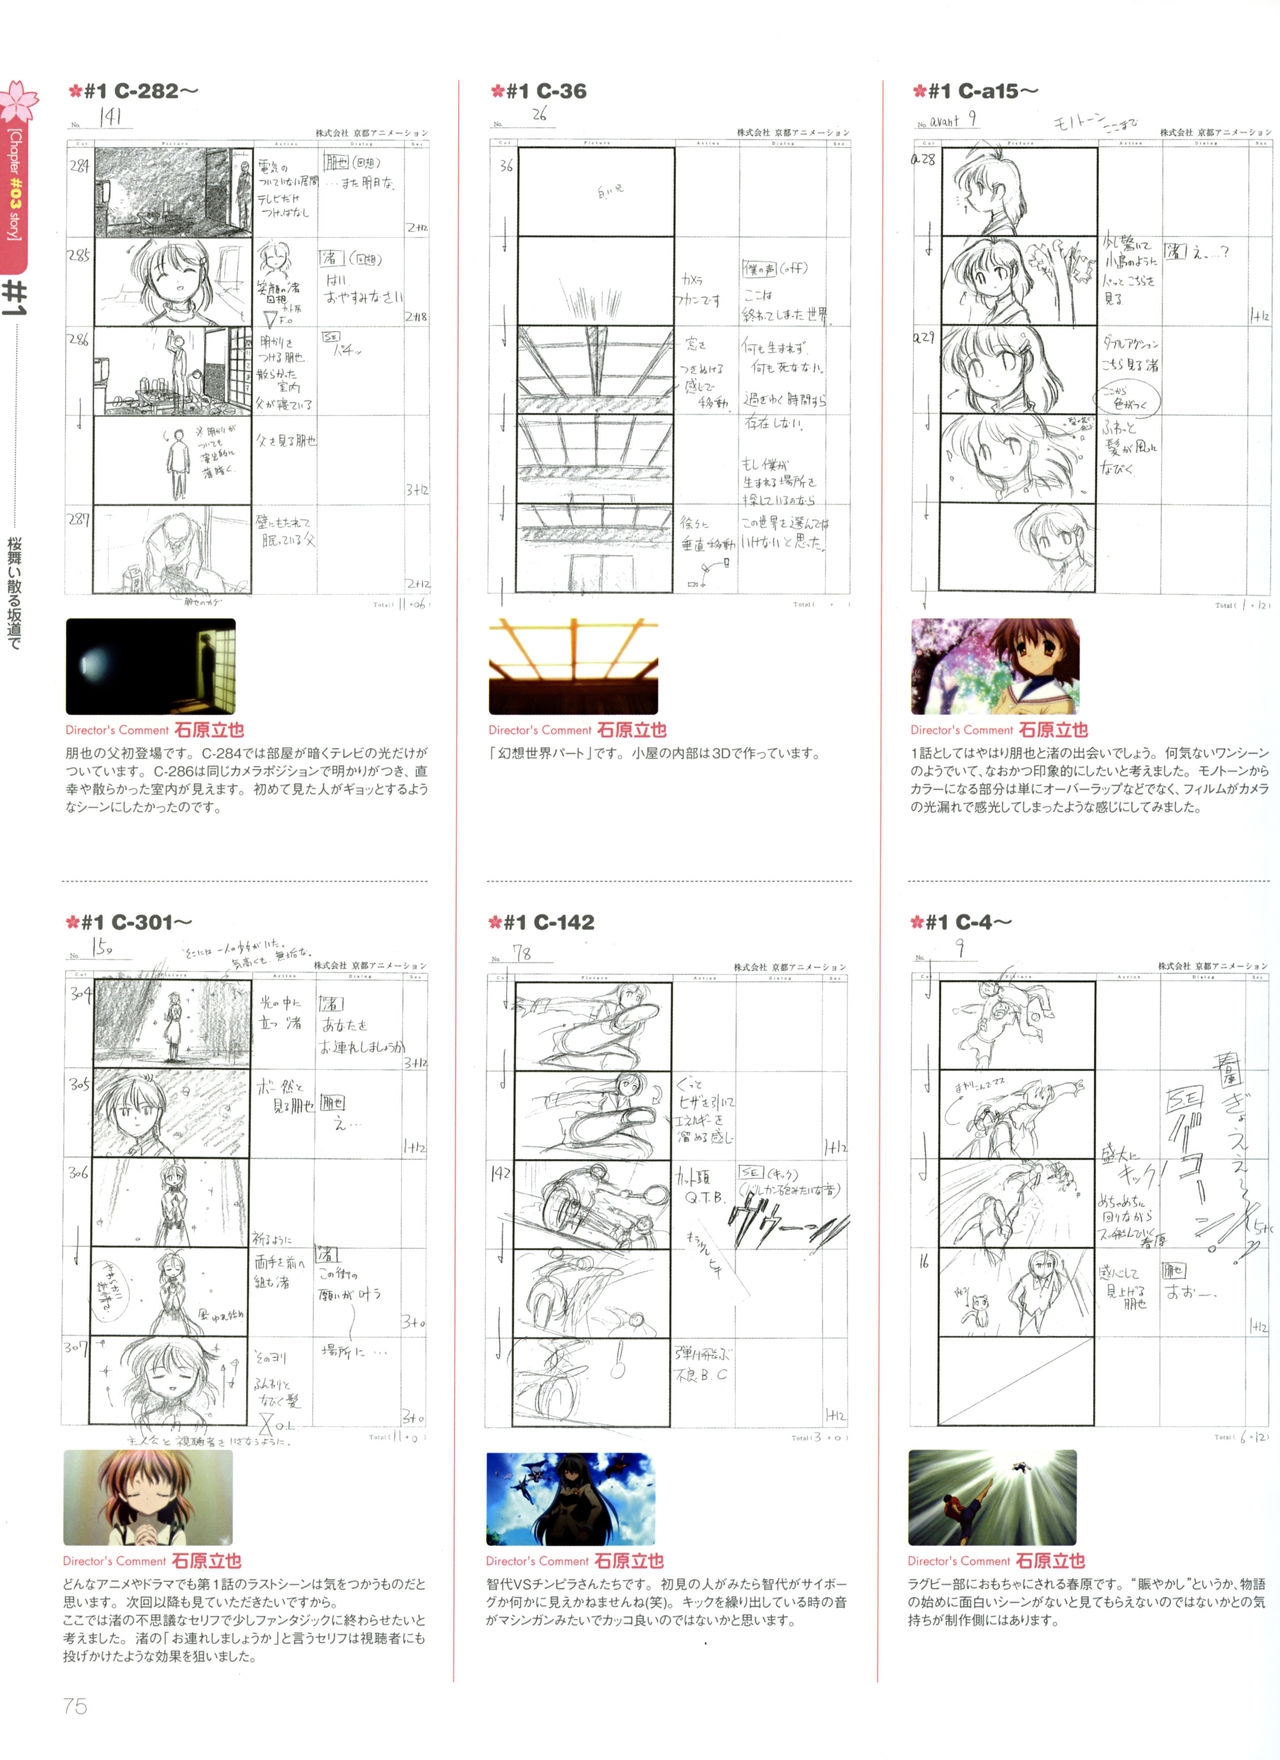 Clannad TV Animation Visual Fan Book 77